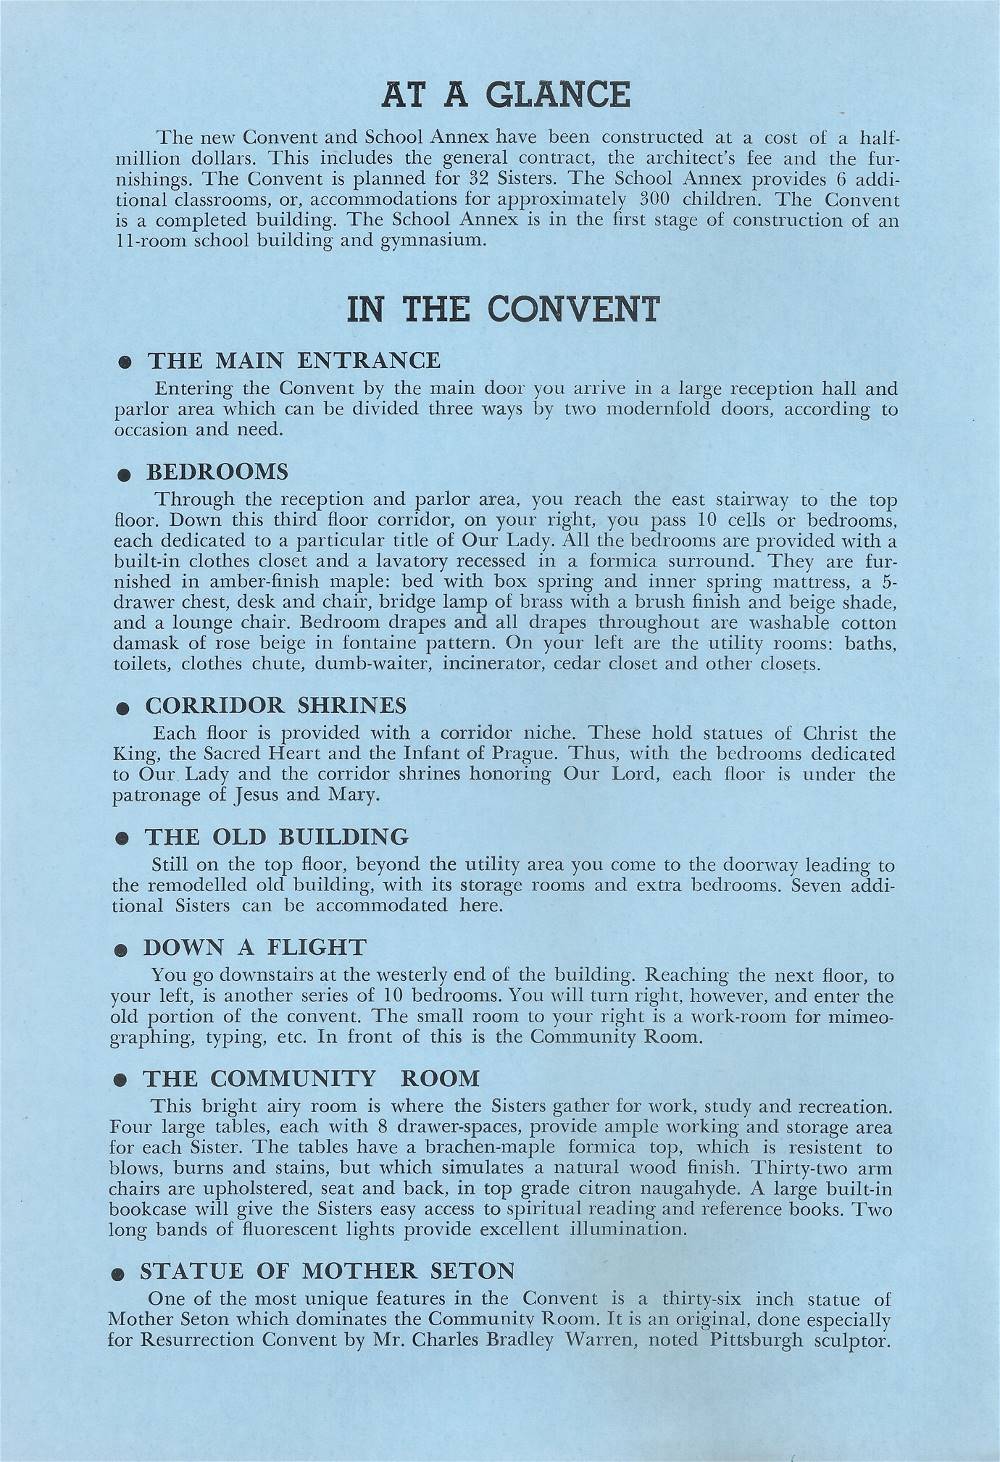 Resurrection Convent Dedication Booklet - 1957